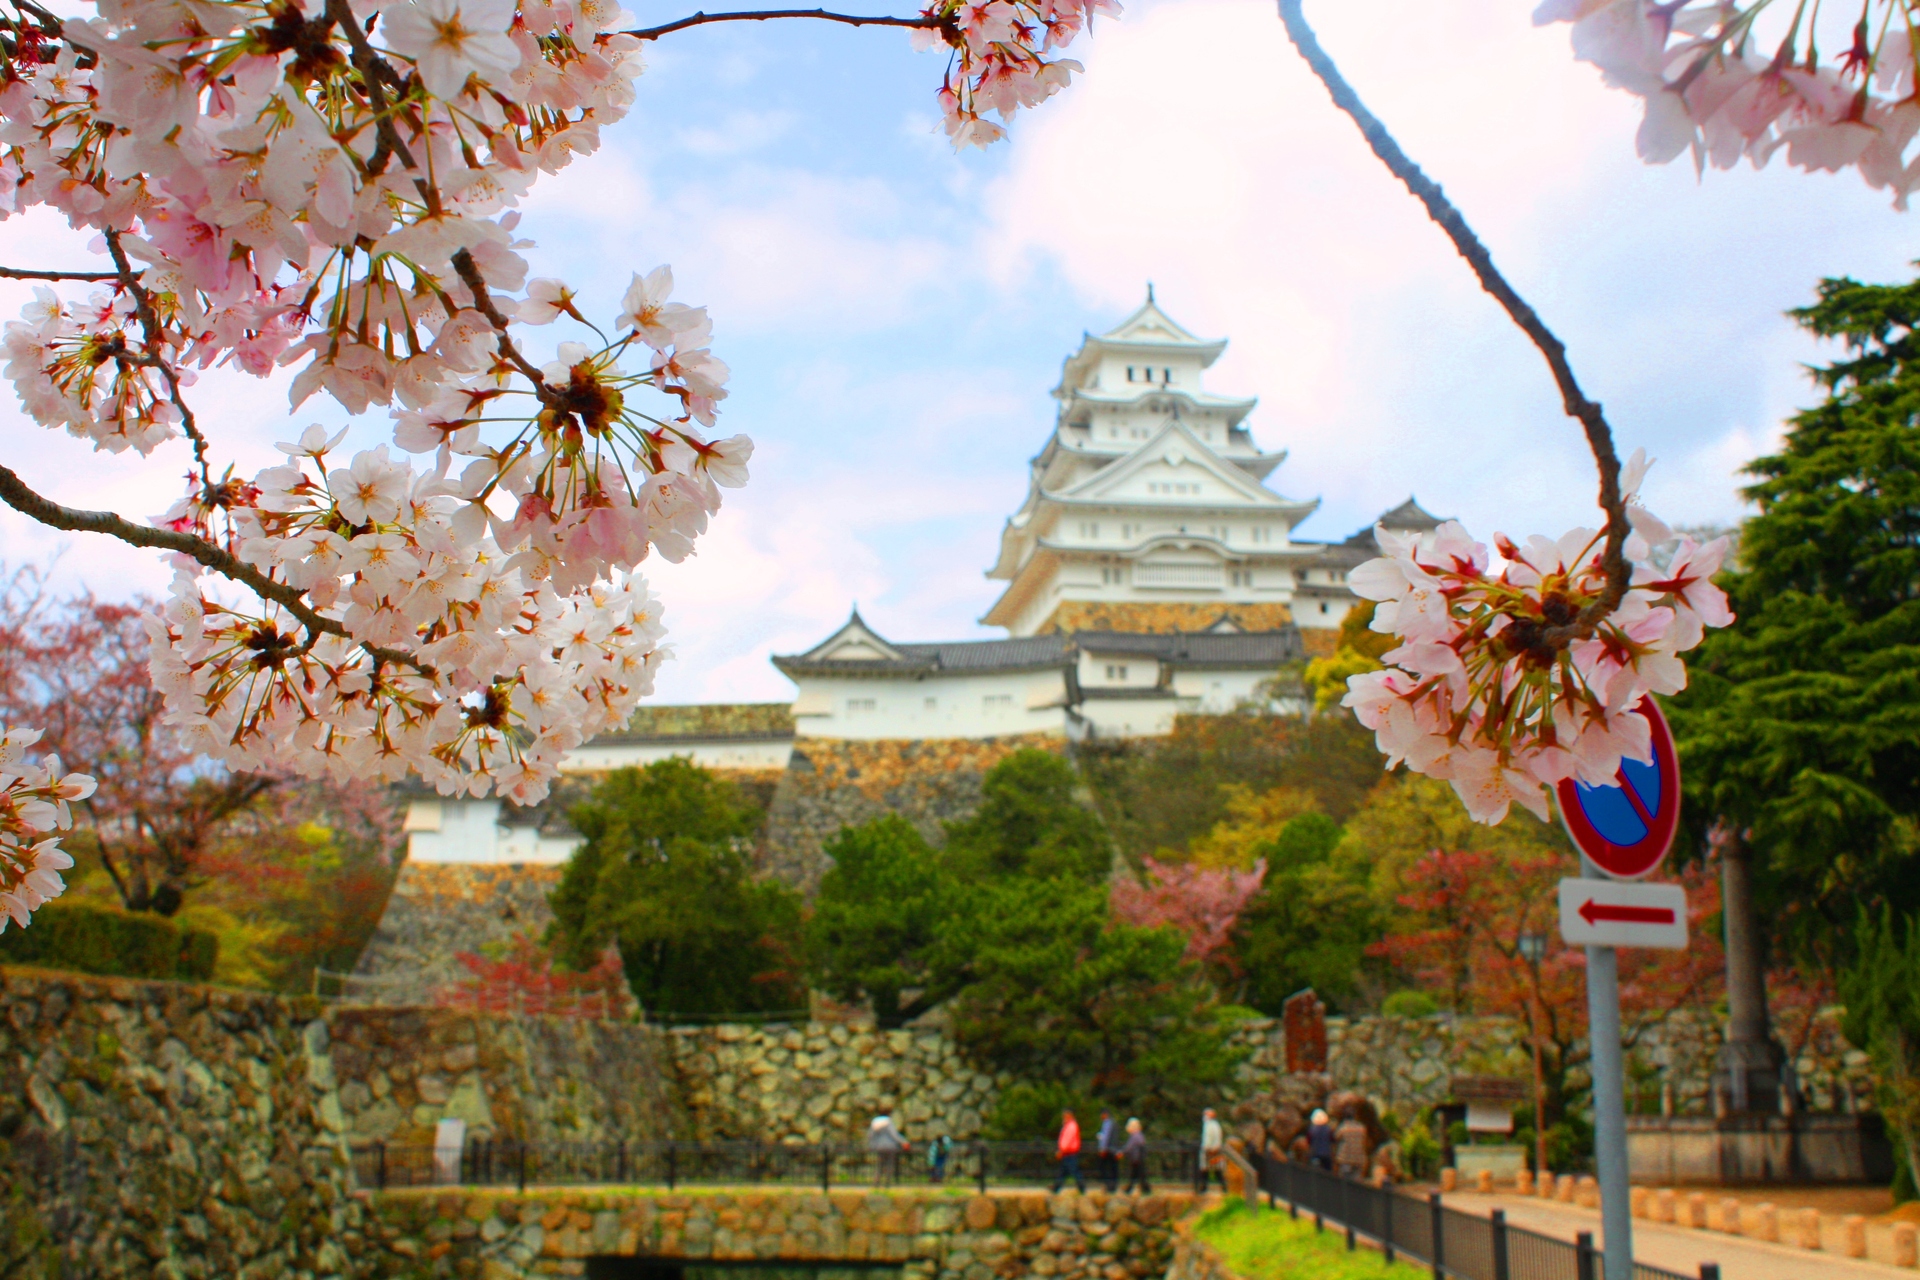 日本の風景 桜の姫路城 壁紙19x1280 壁紙館